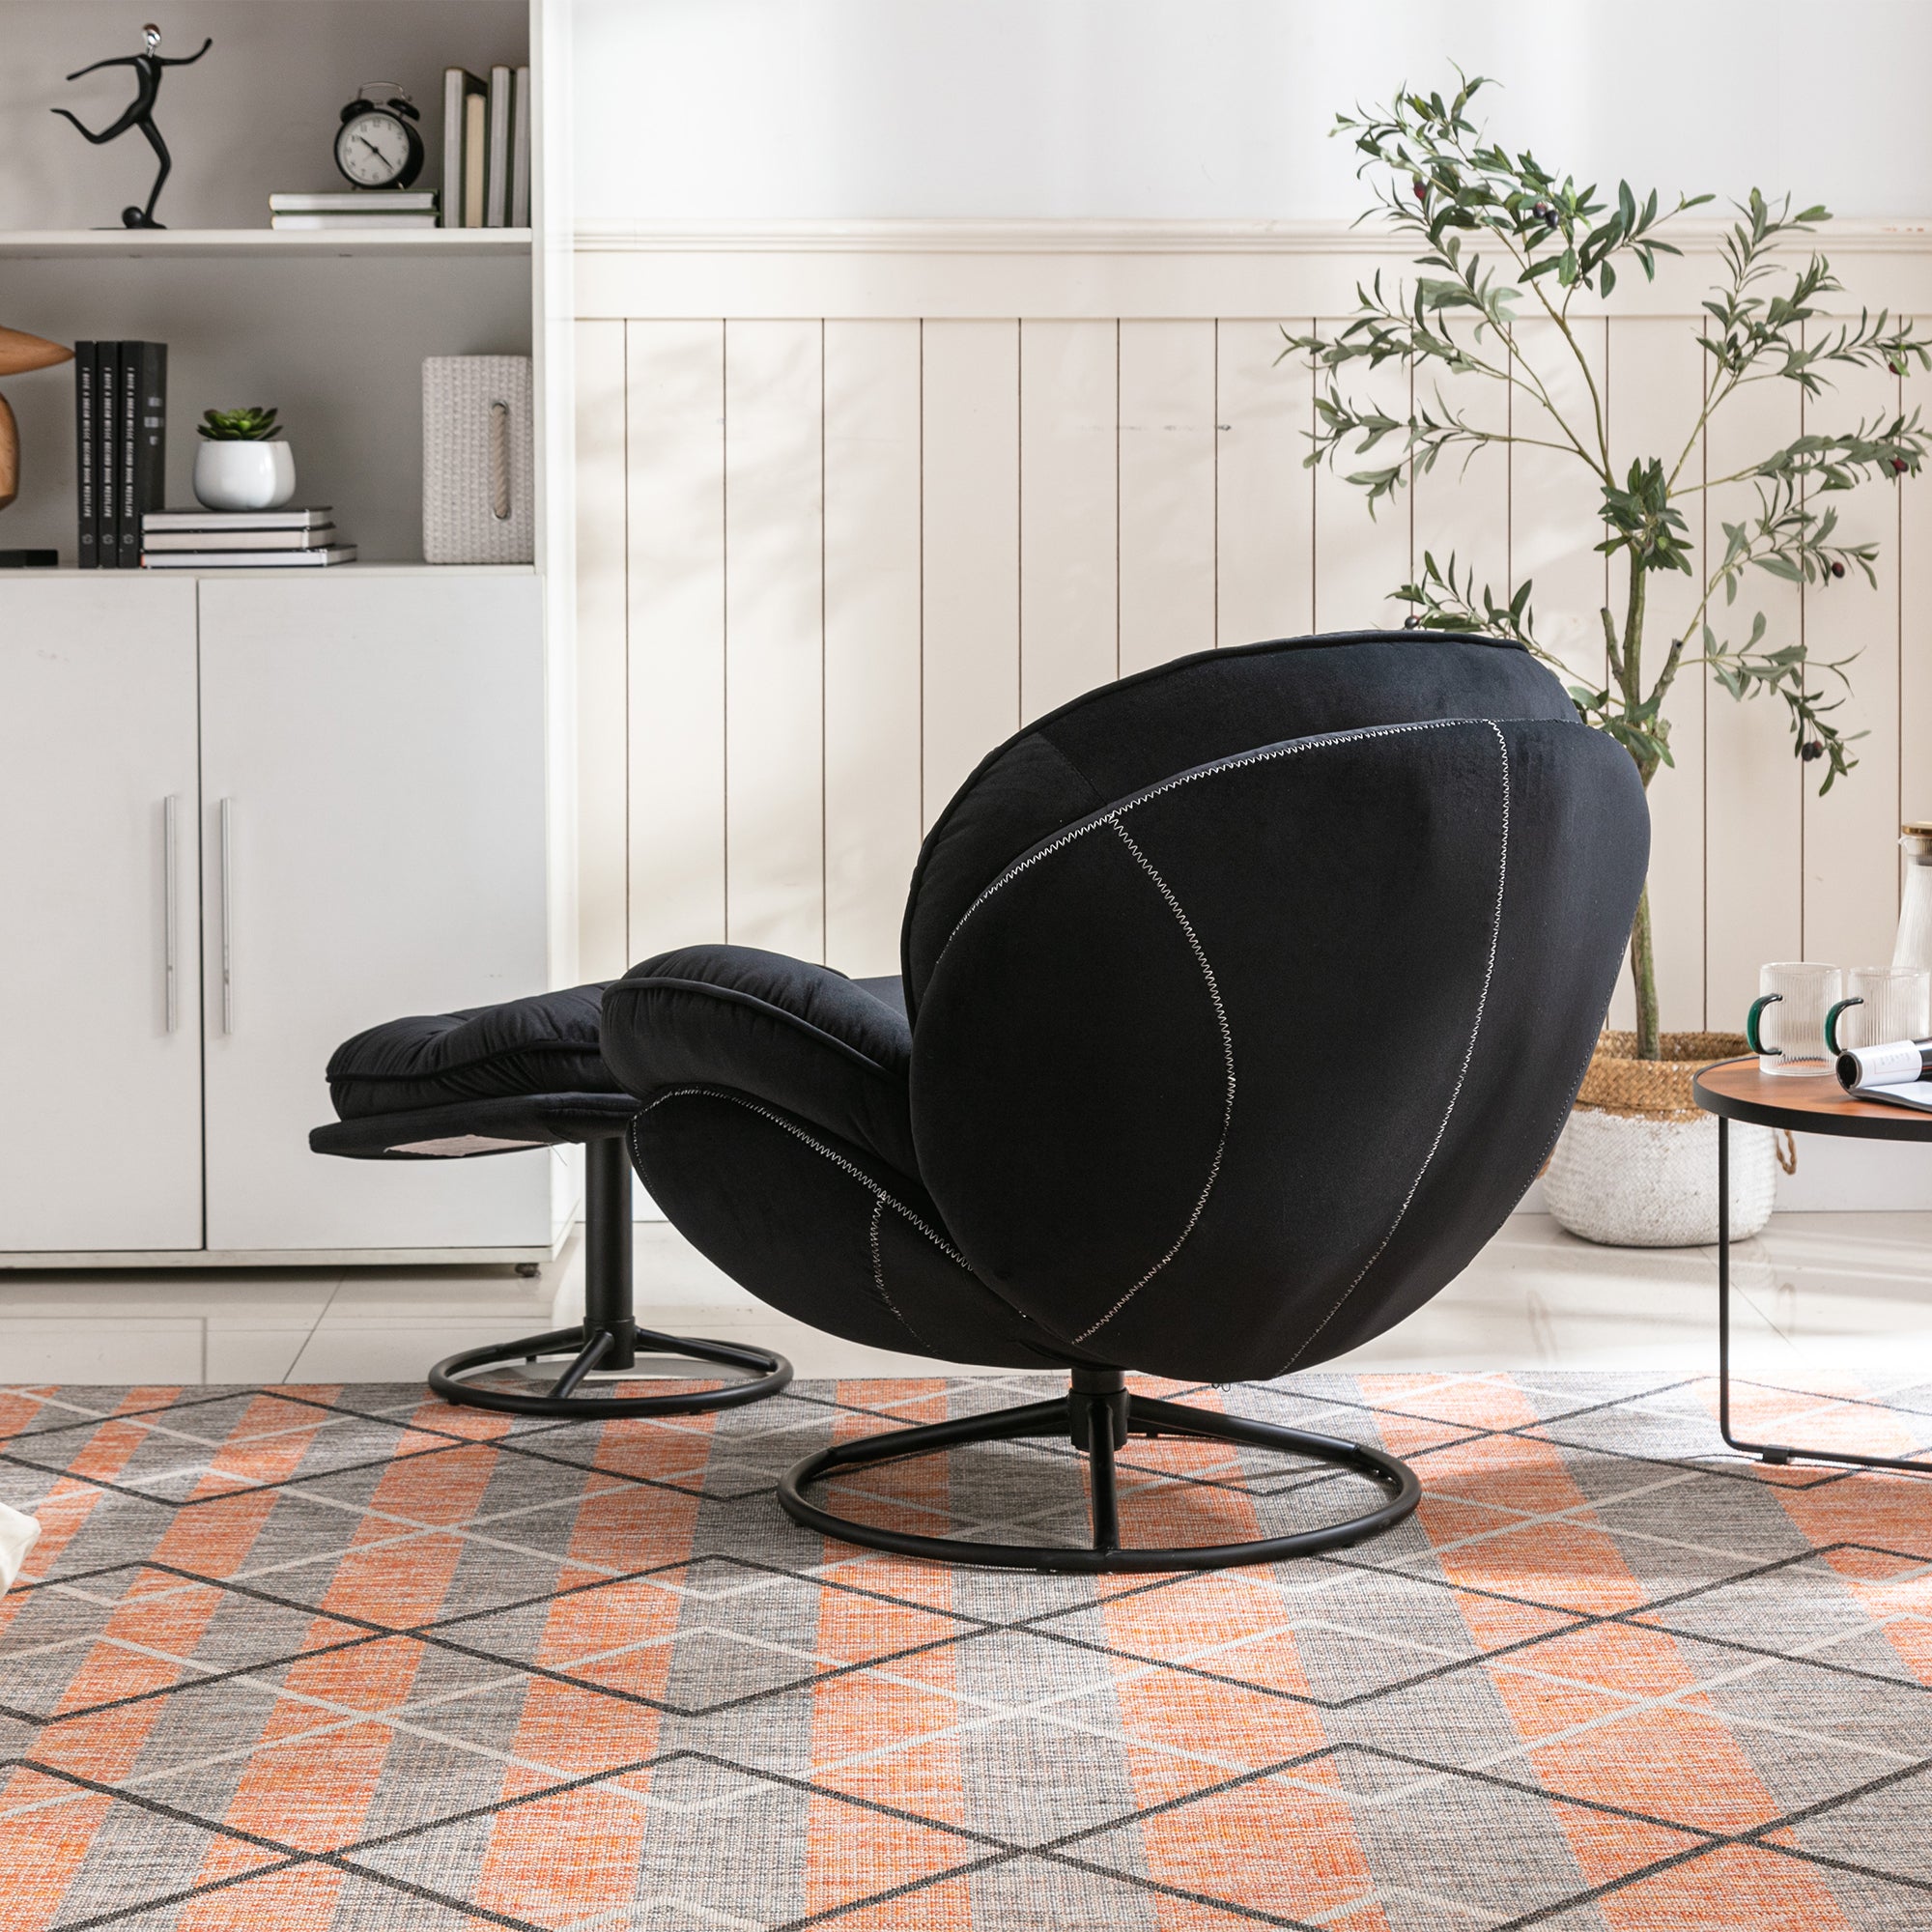 NOBLEMOOD Swivel Accent chair with Ottoman, Velvet Upholstered Lounge Sofa Chair for Living Room Bedroom, Black